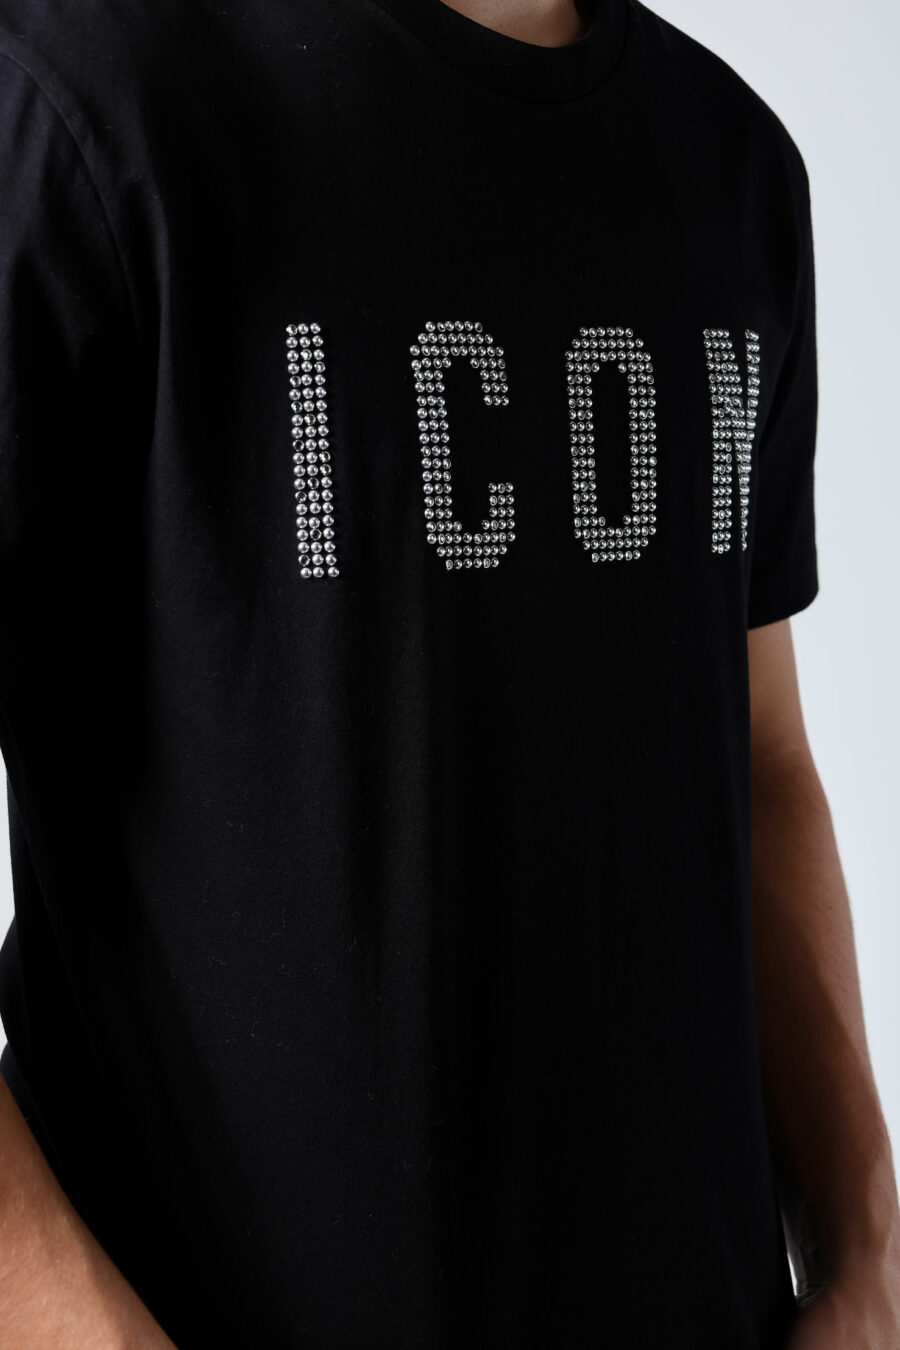 Black T-shirt with white checked "icon" logo - Untitled Catalog 05676